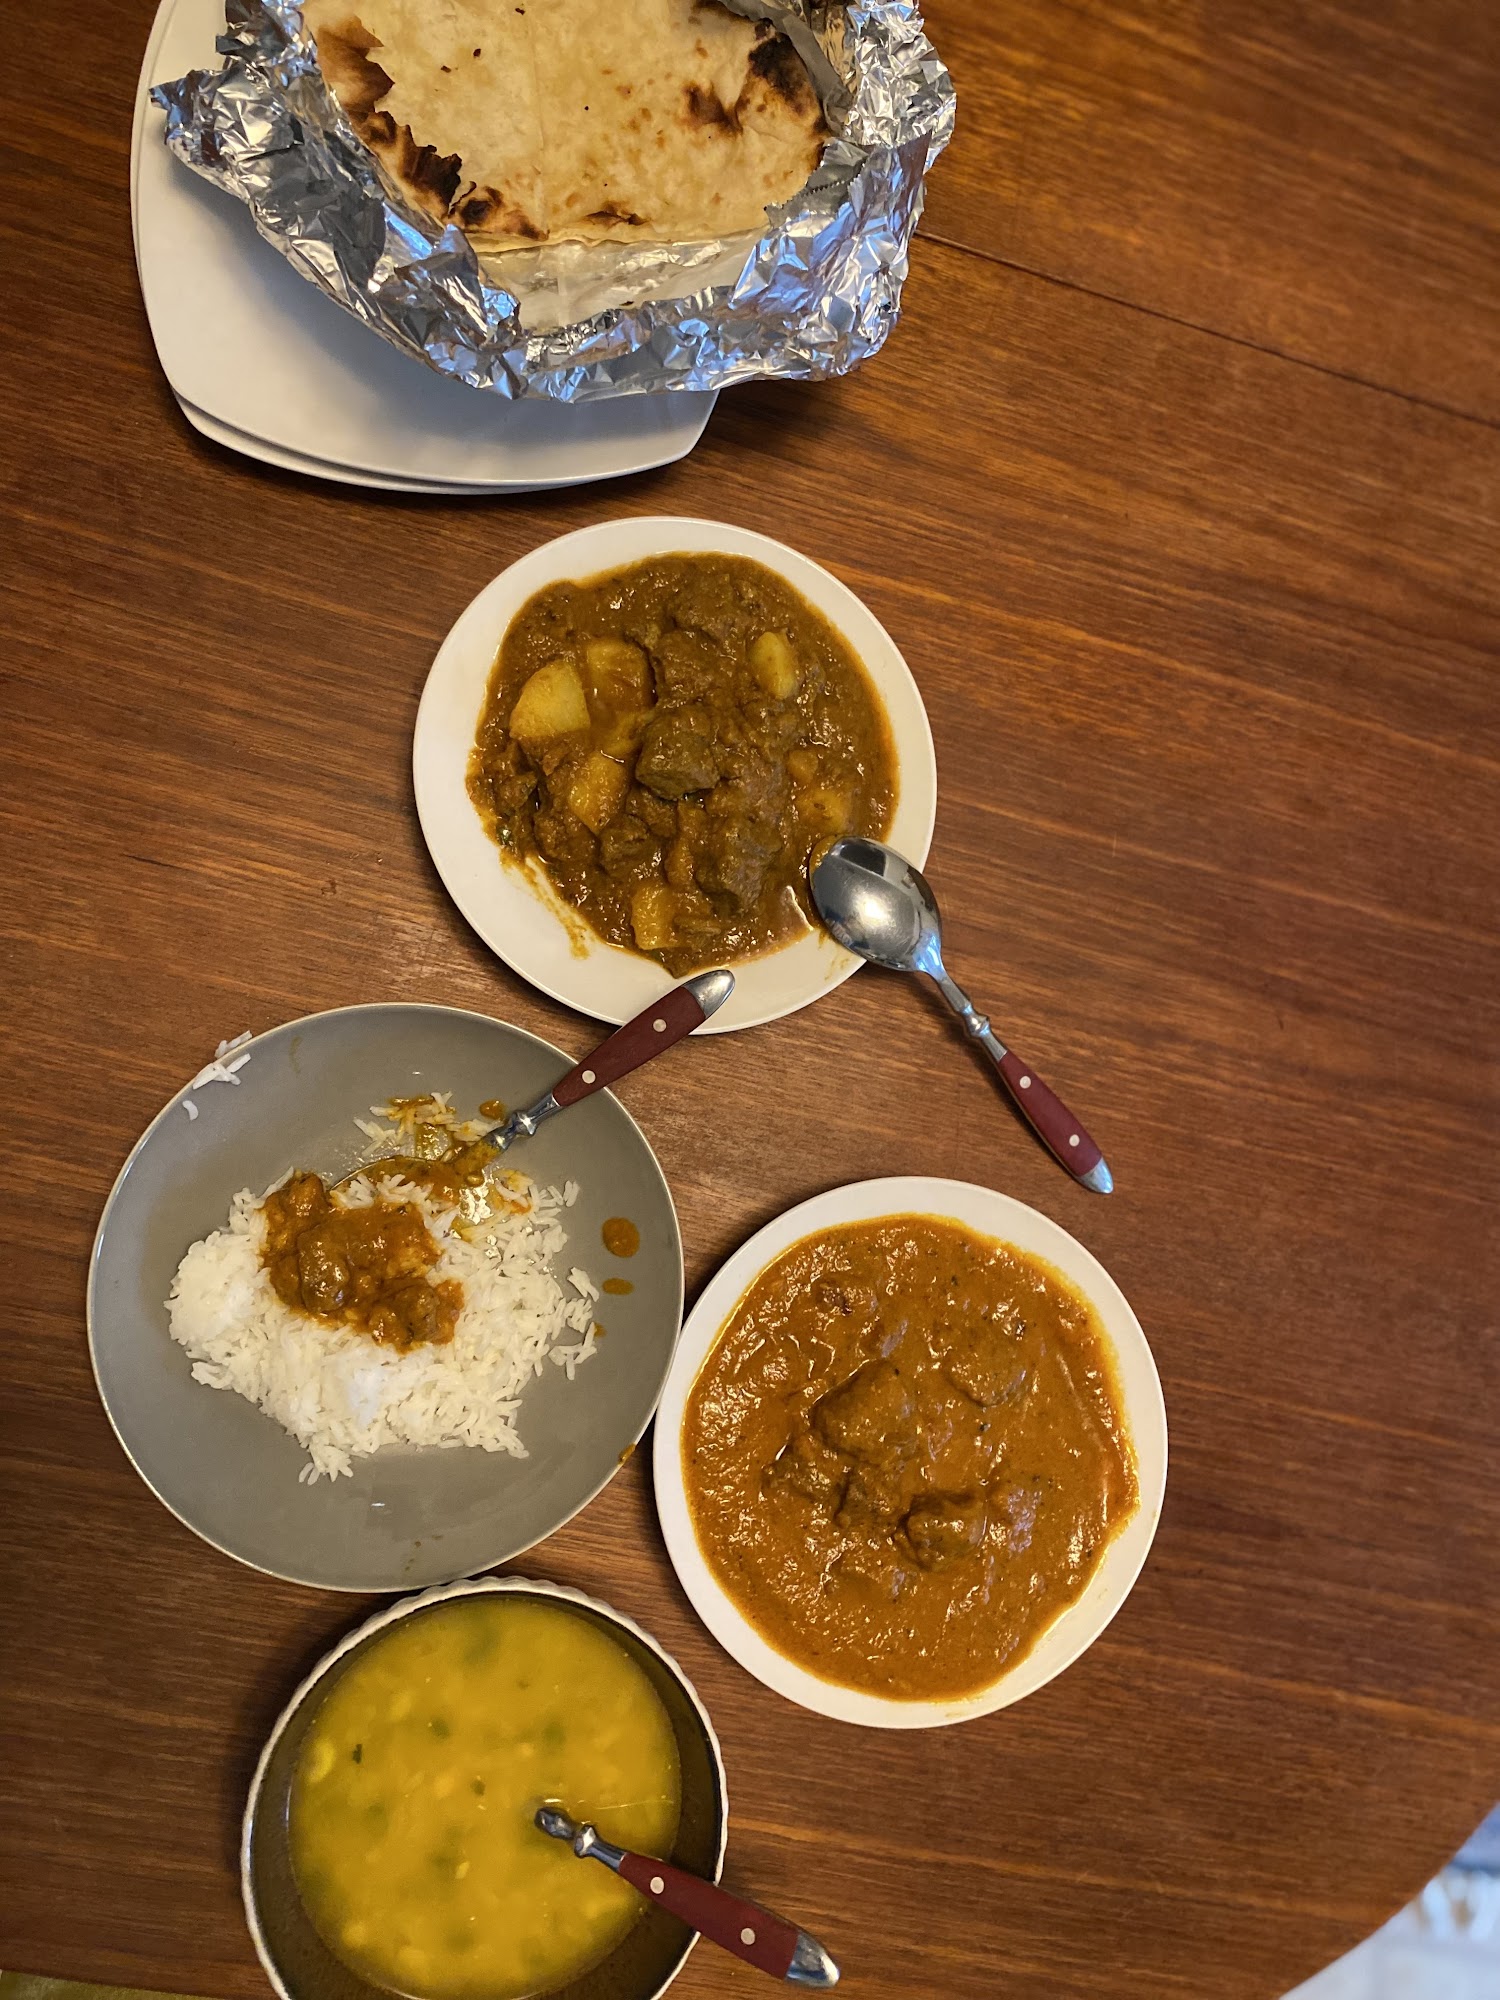 Royal Indian Cuisine